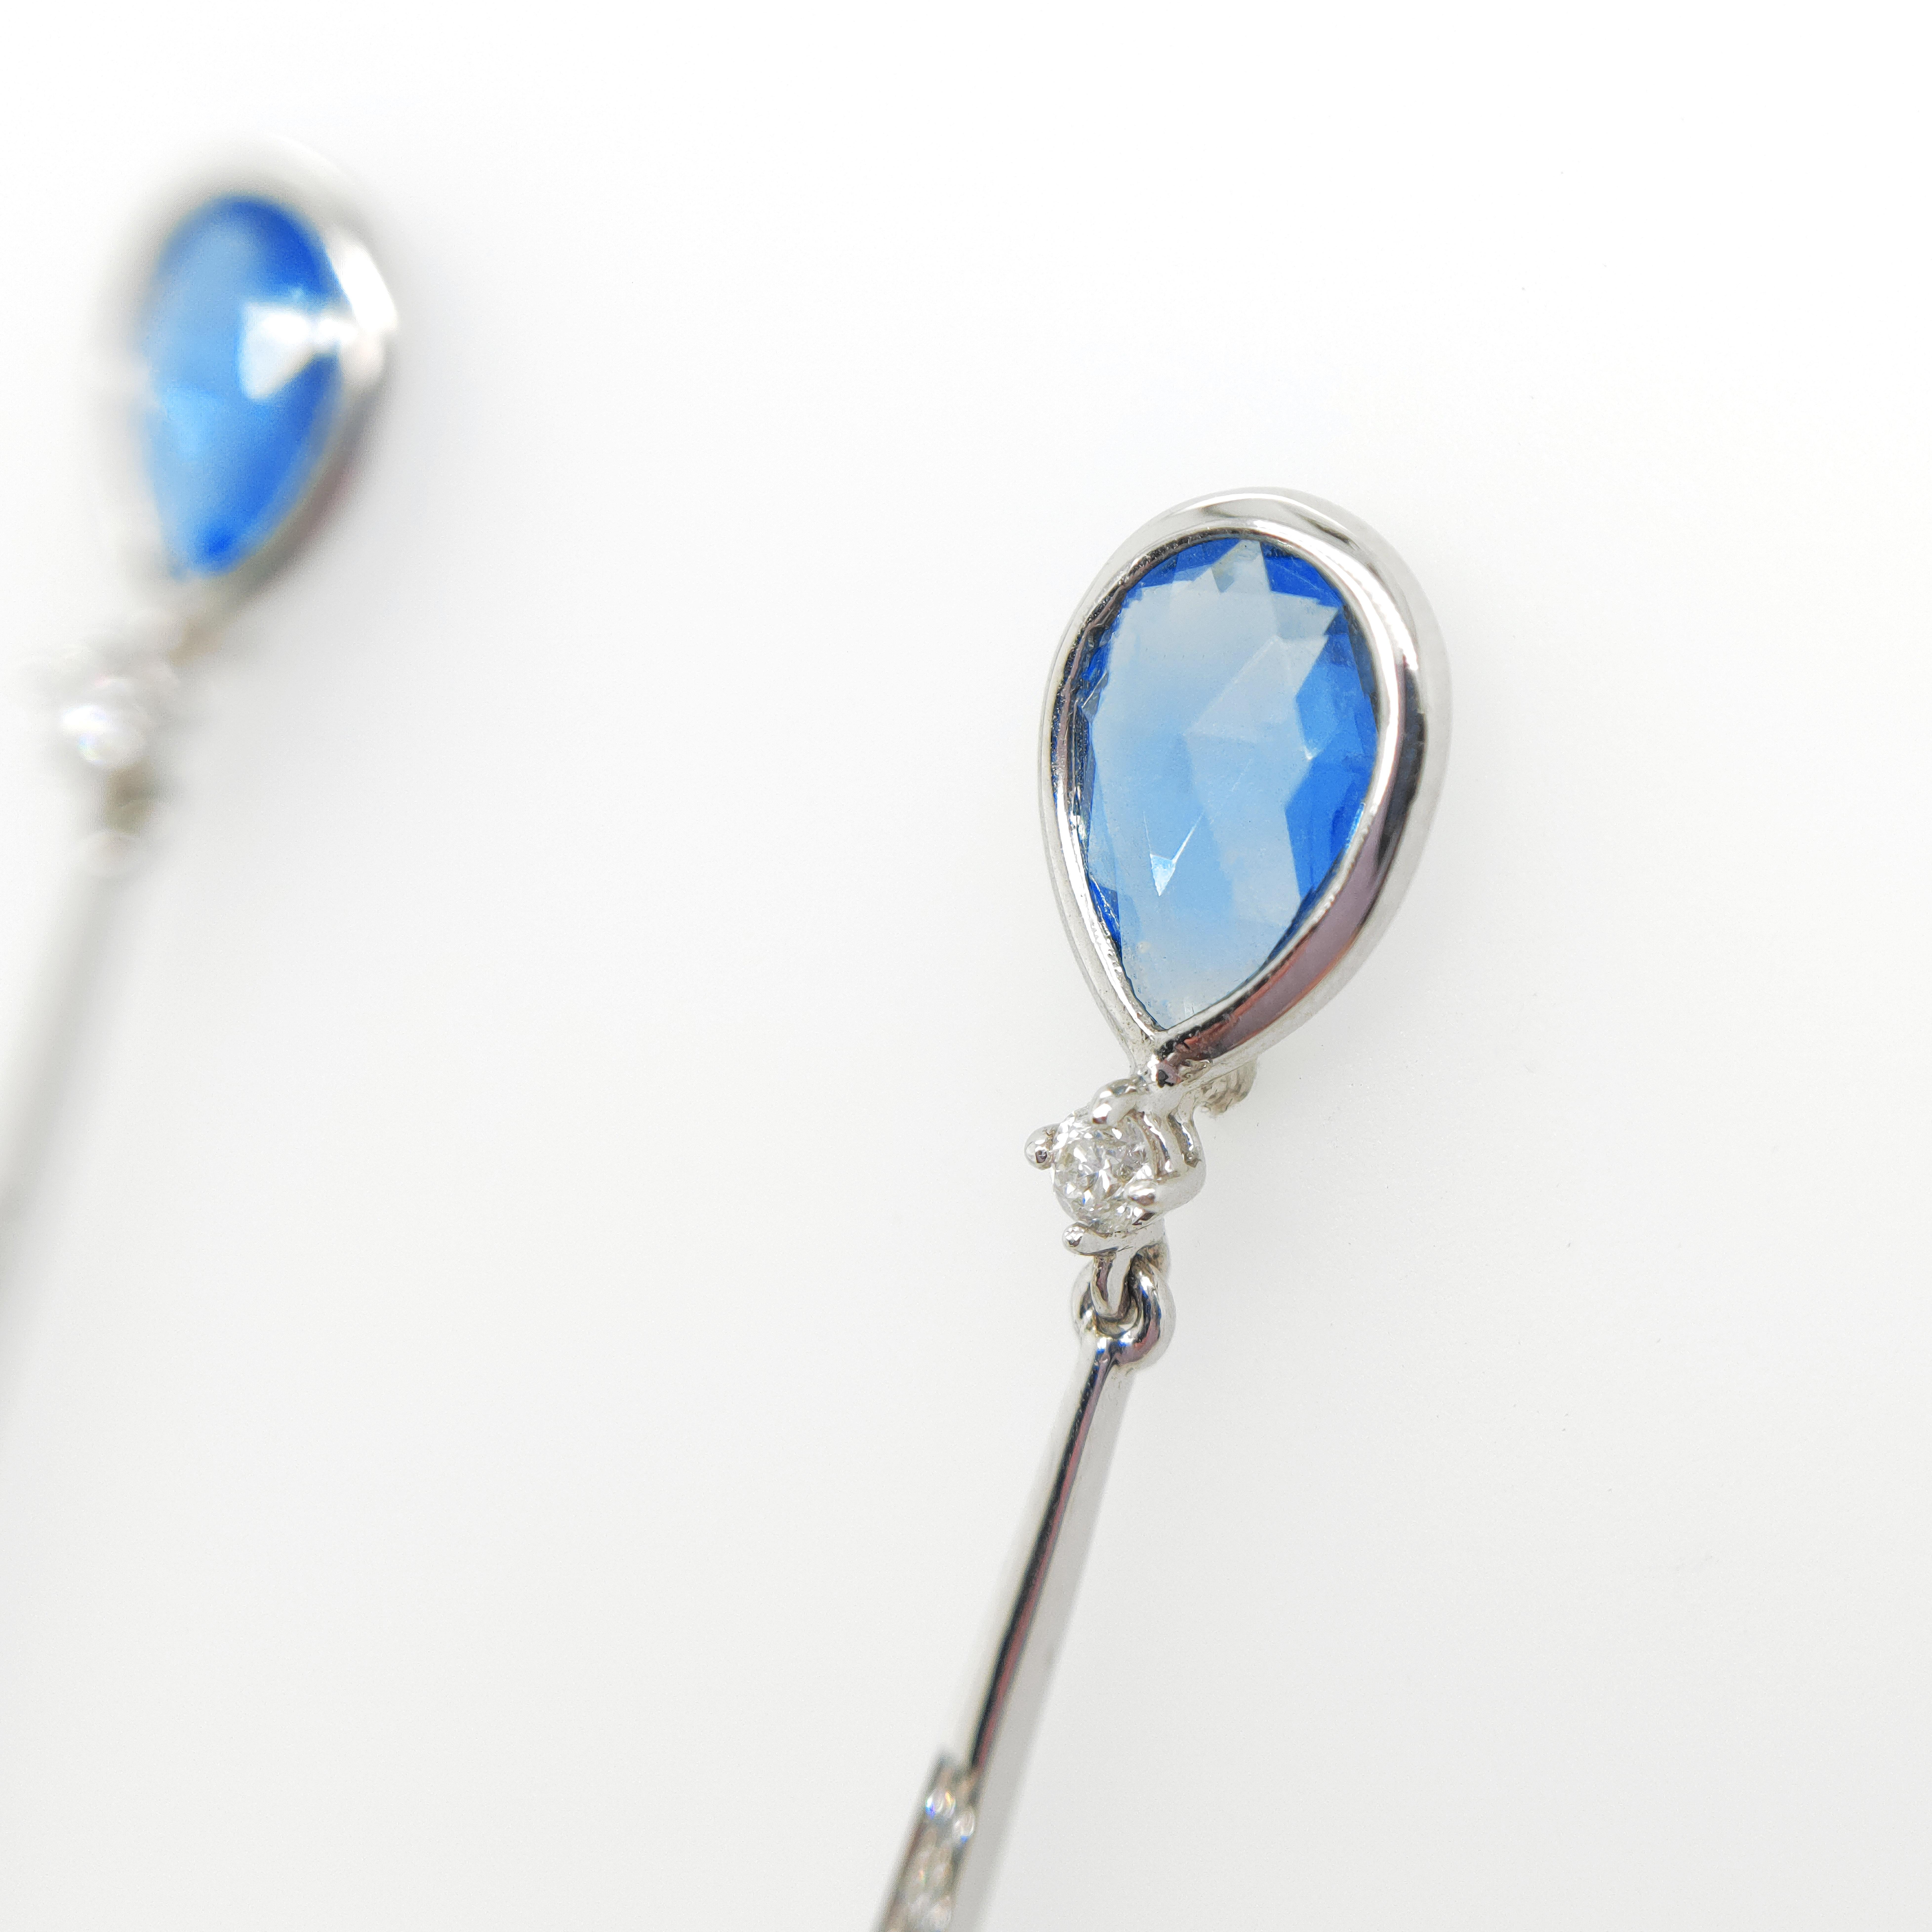 Modern Fine Chandelier Earrings with Diamonds and Blue Topaz